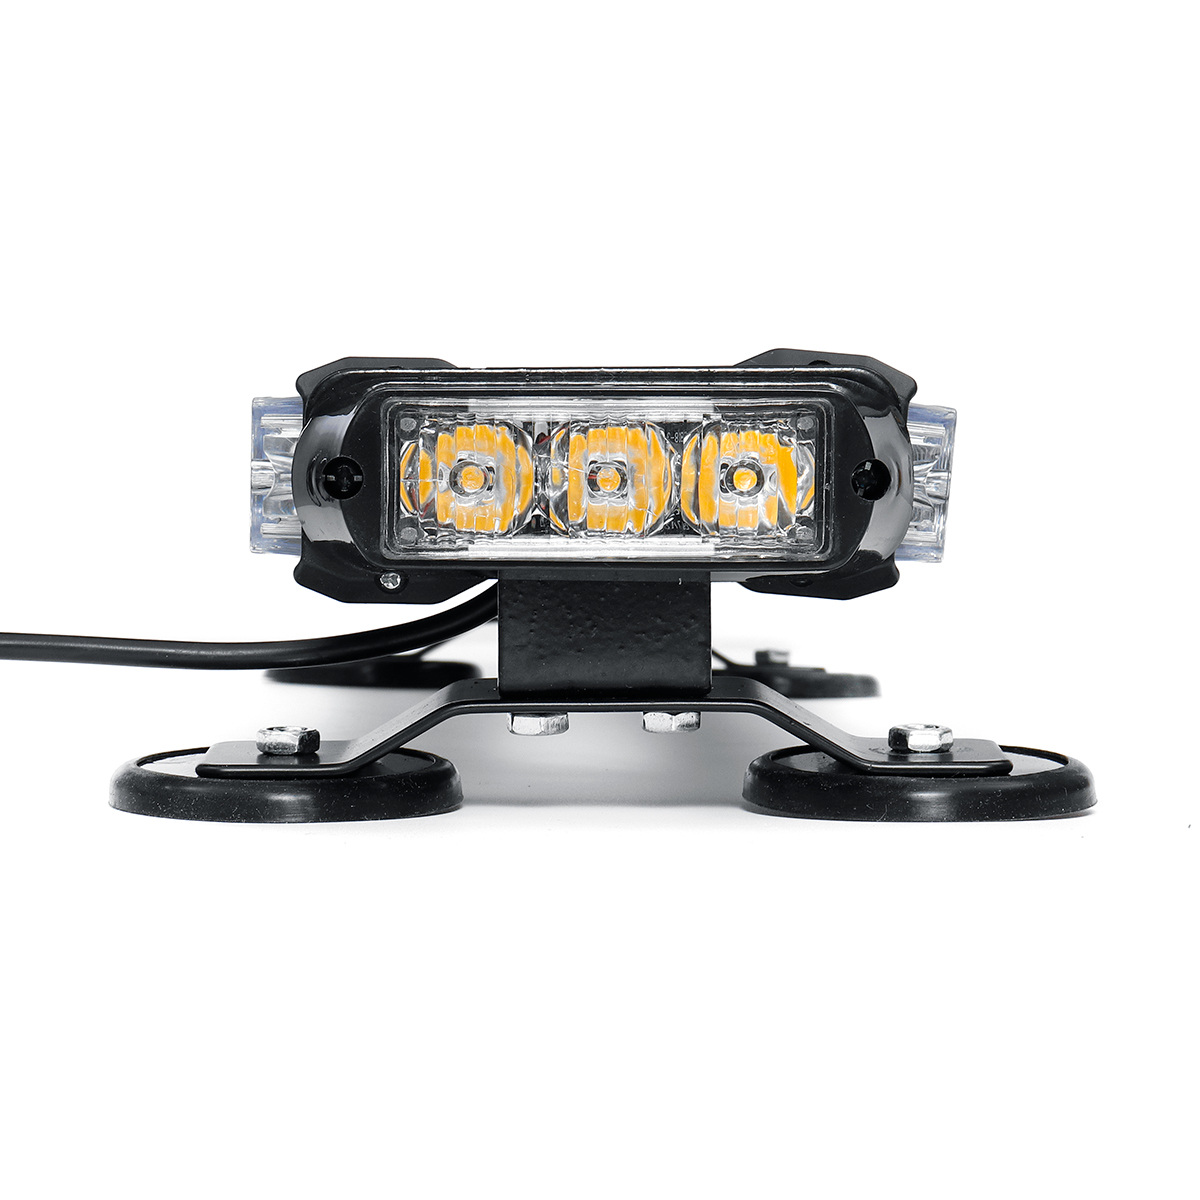 21 Inch 144W 42LED Double Side Traffic Strobe Flash Light Bar Amber Emergency Lamp Magnetic Mount 12V Universal